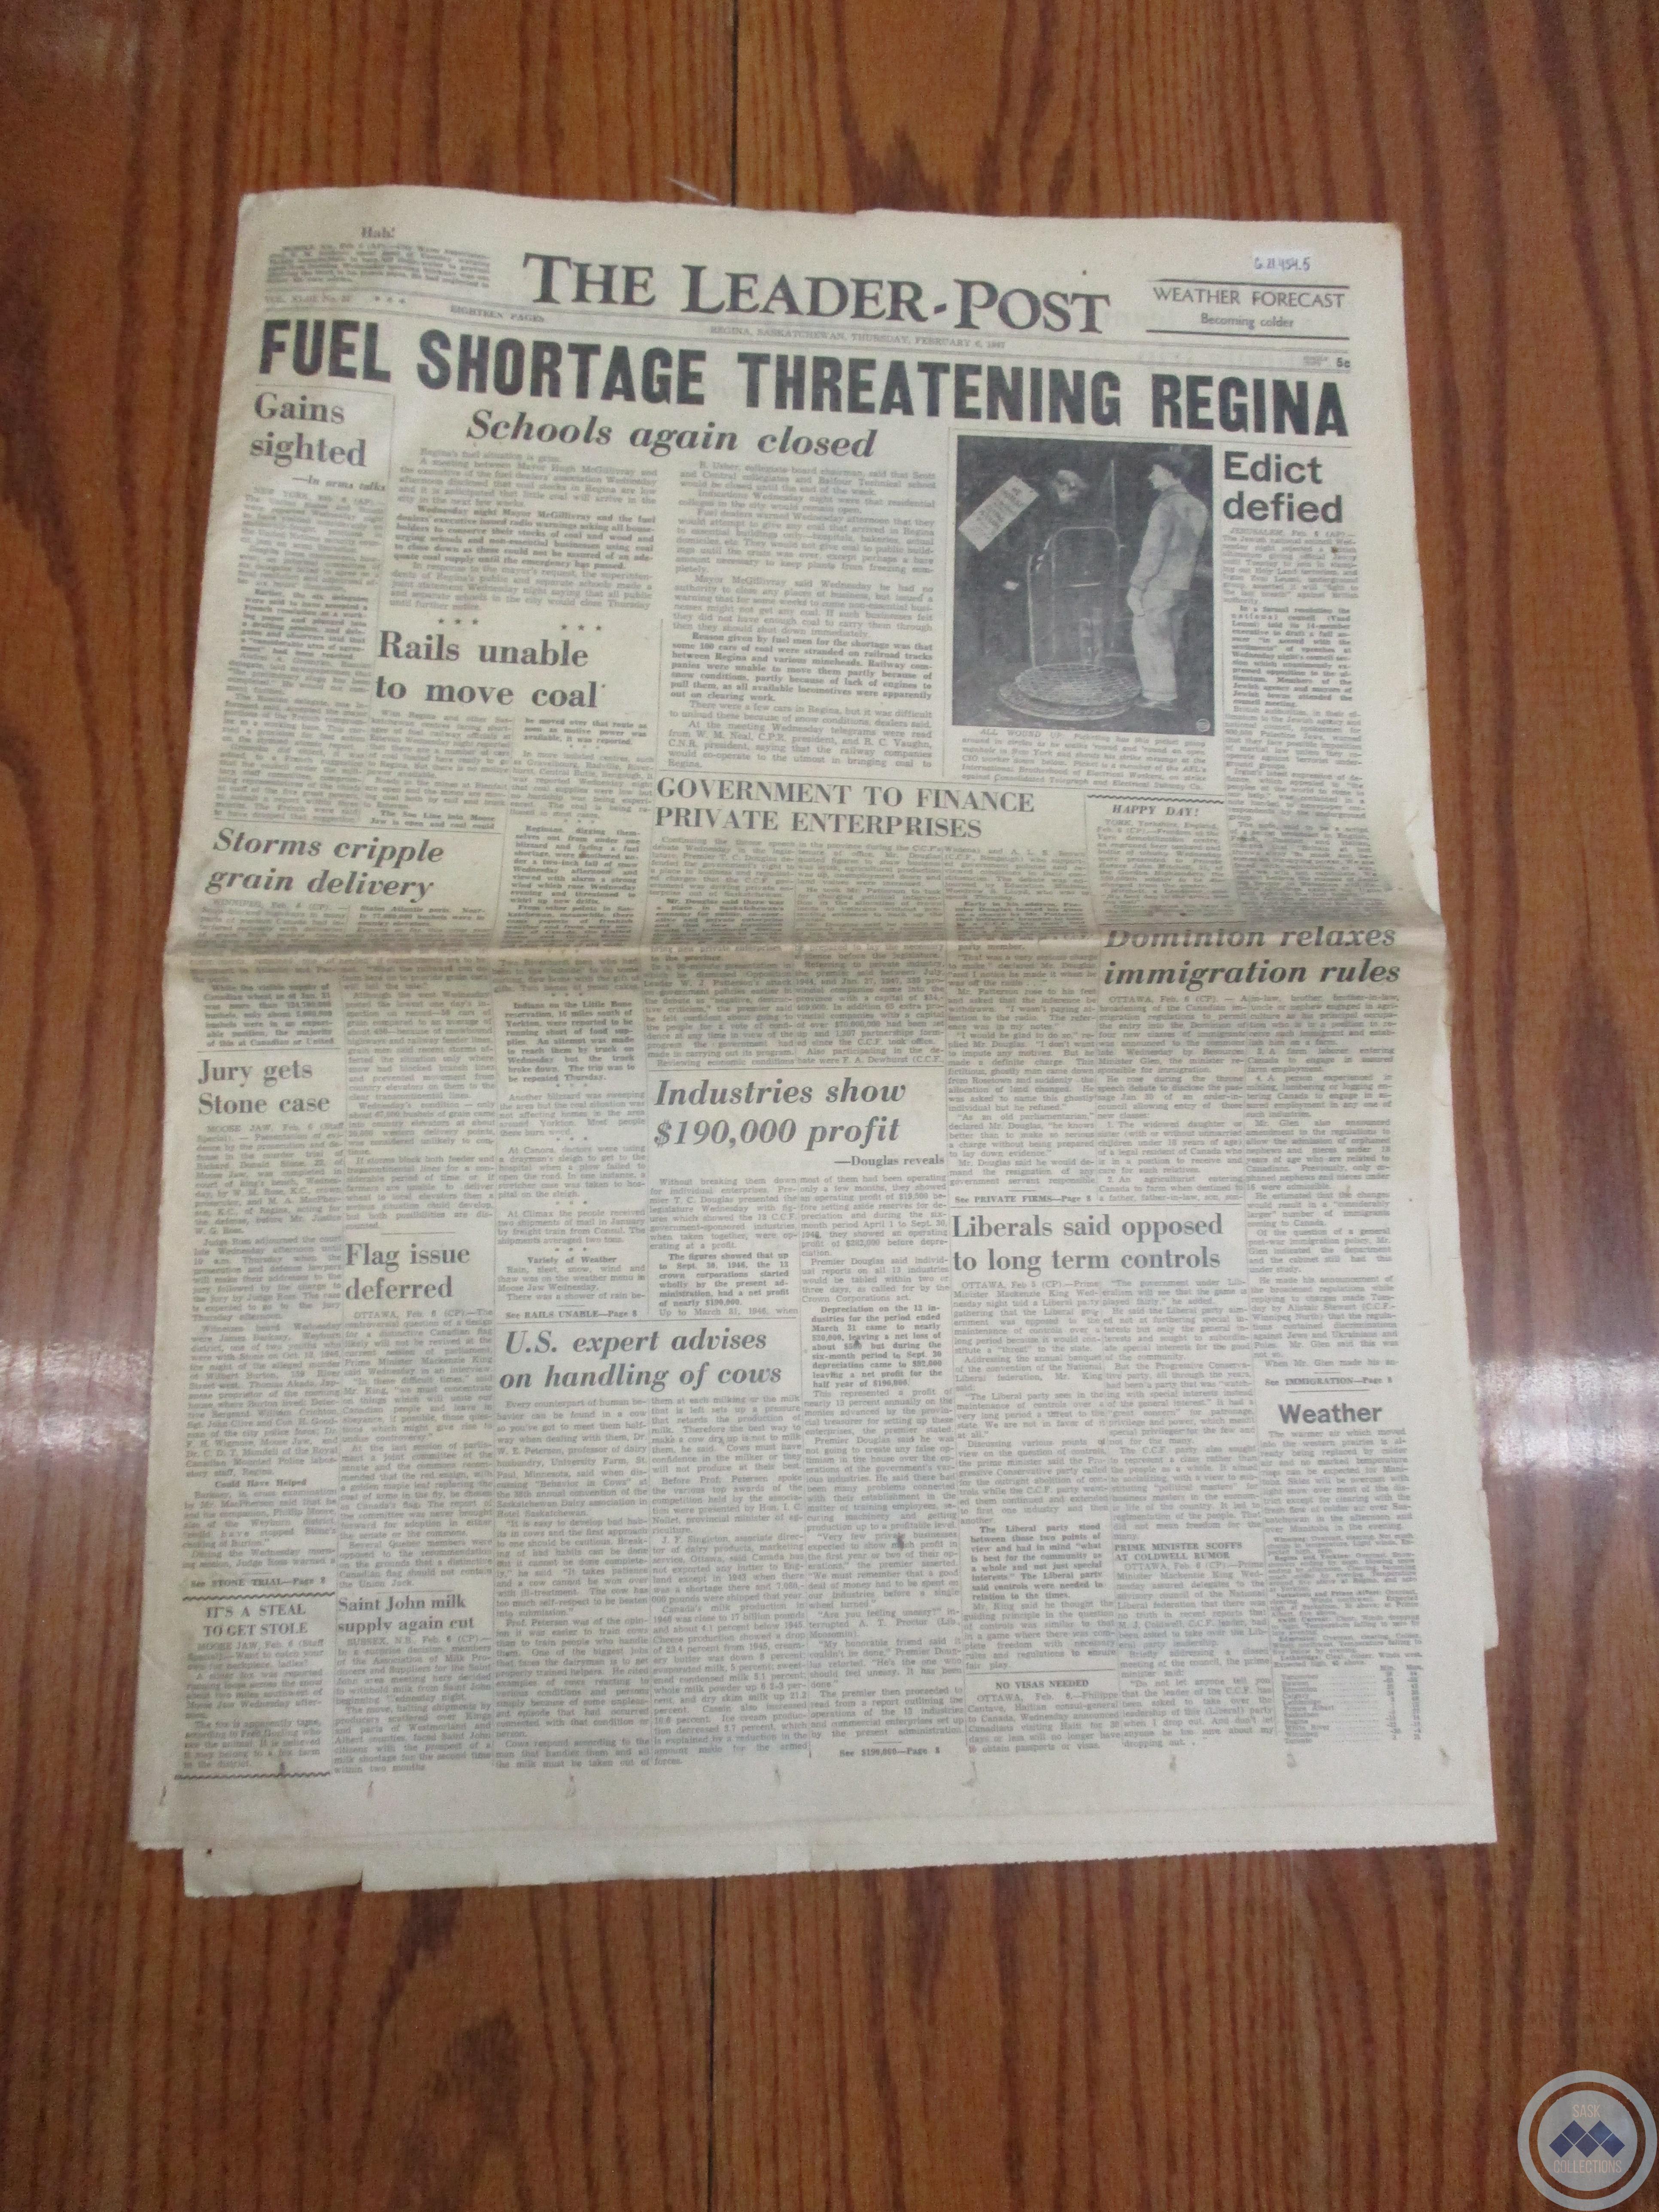 The Leader-Post: “Fuel Shortage Threatening Regina” (February 6, 1947)